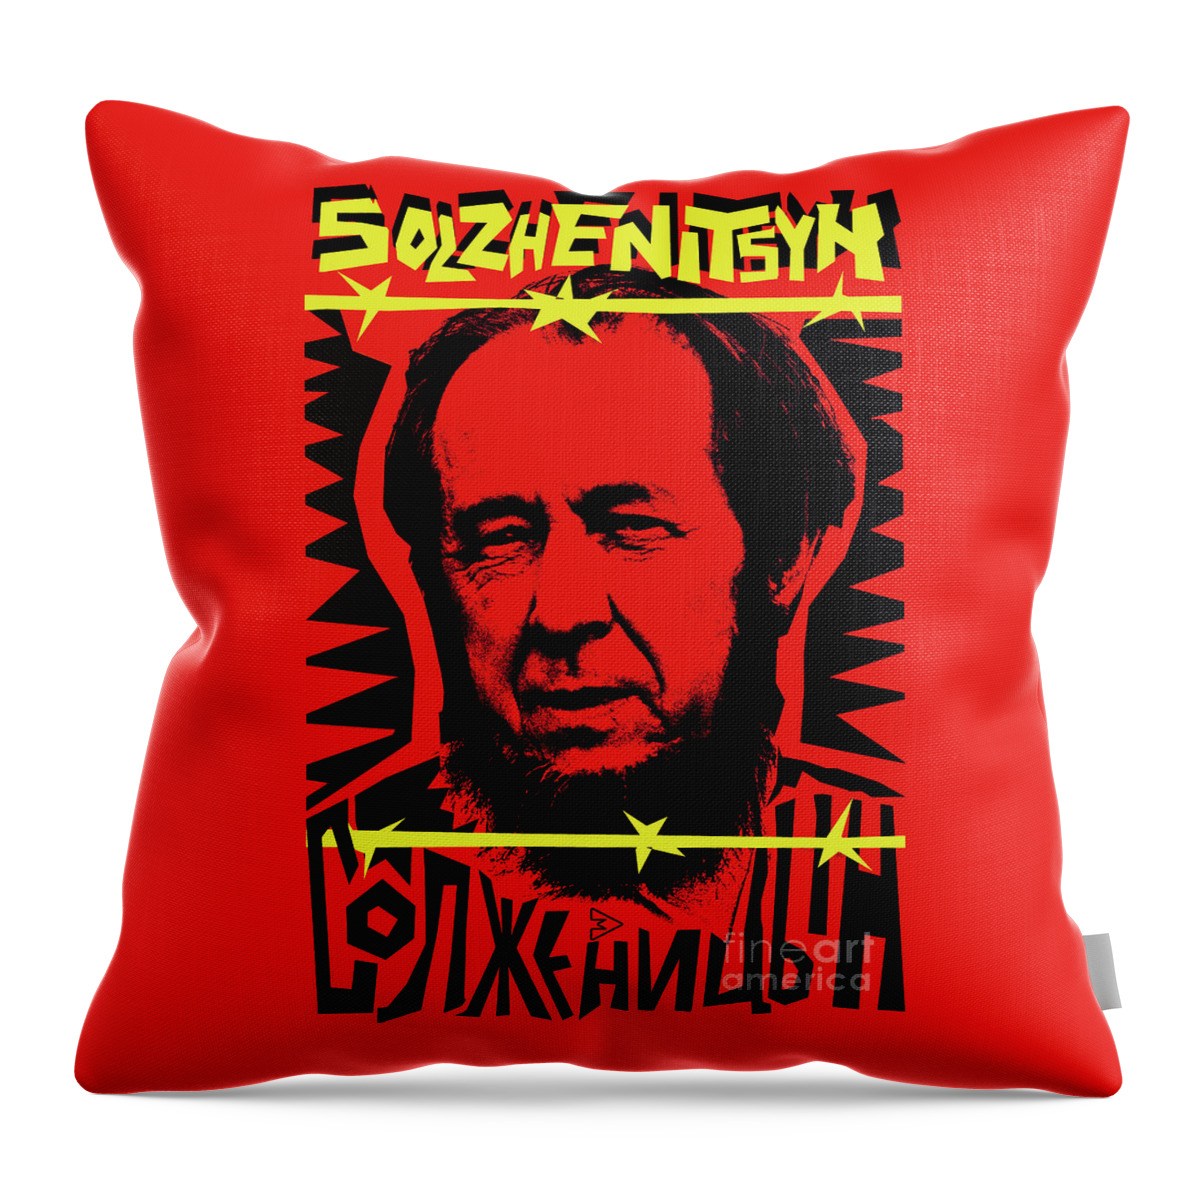 Aleksandr Throw Pillow featuring the digital art Aleksandr Solzhenitsyn #1 by Zoran Maslic